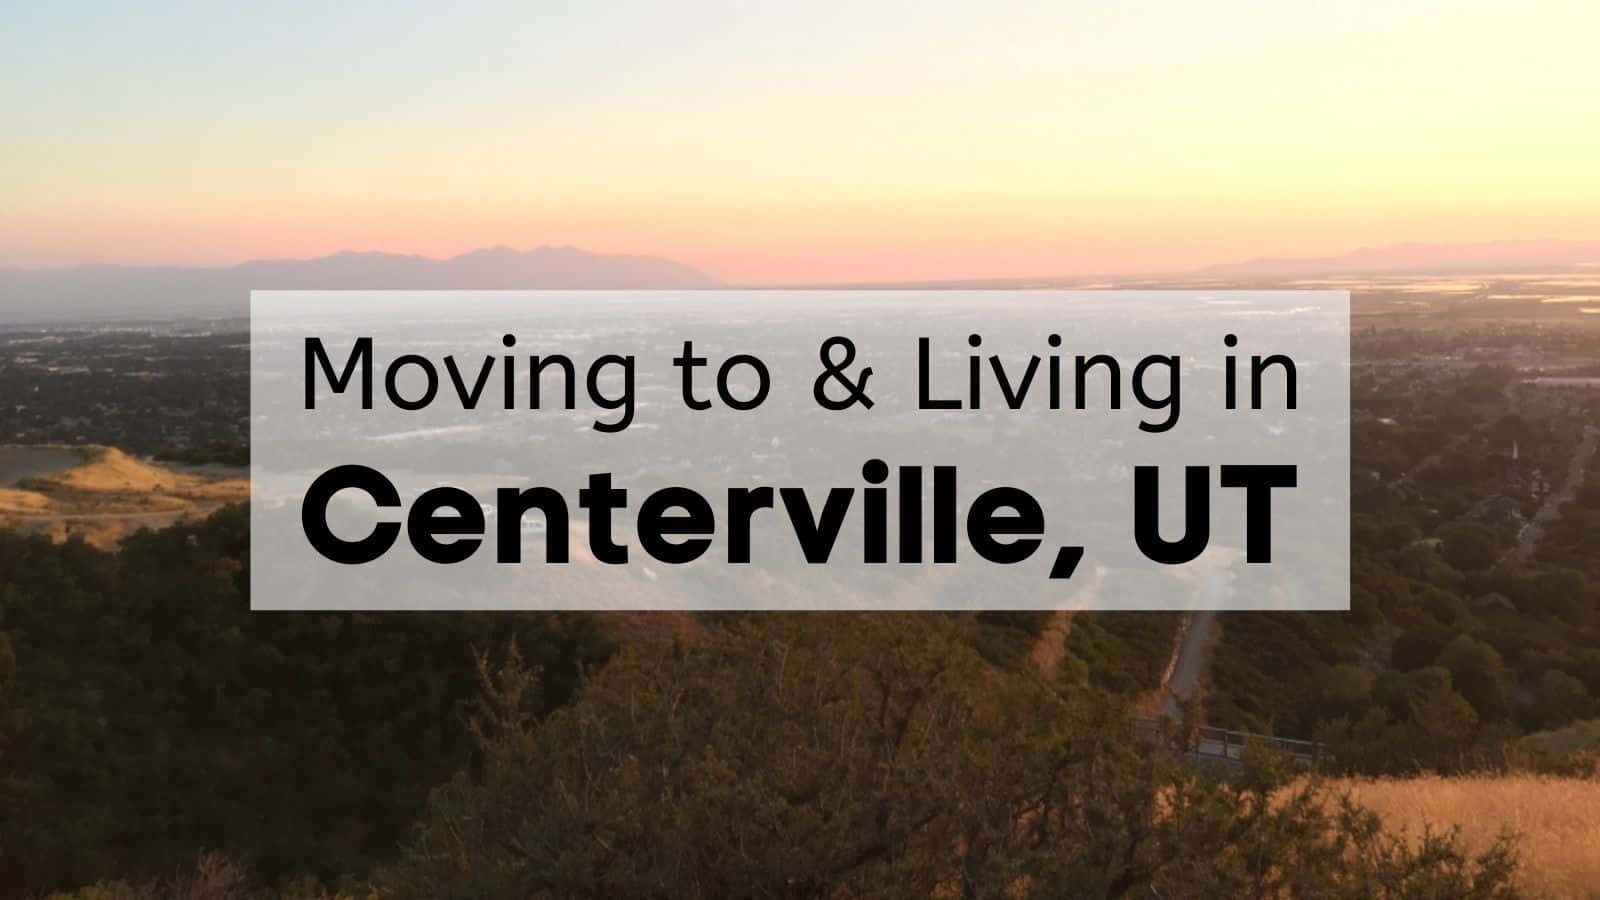 Moving to & Living in Centerville, UT